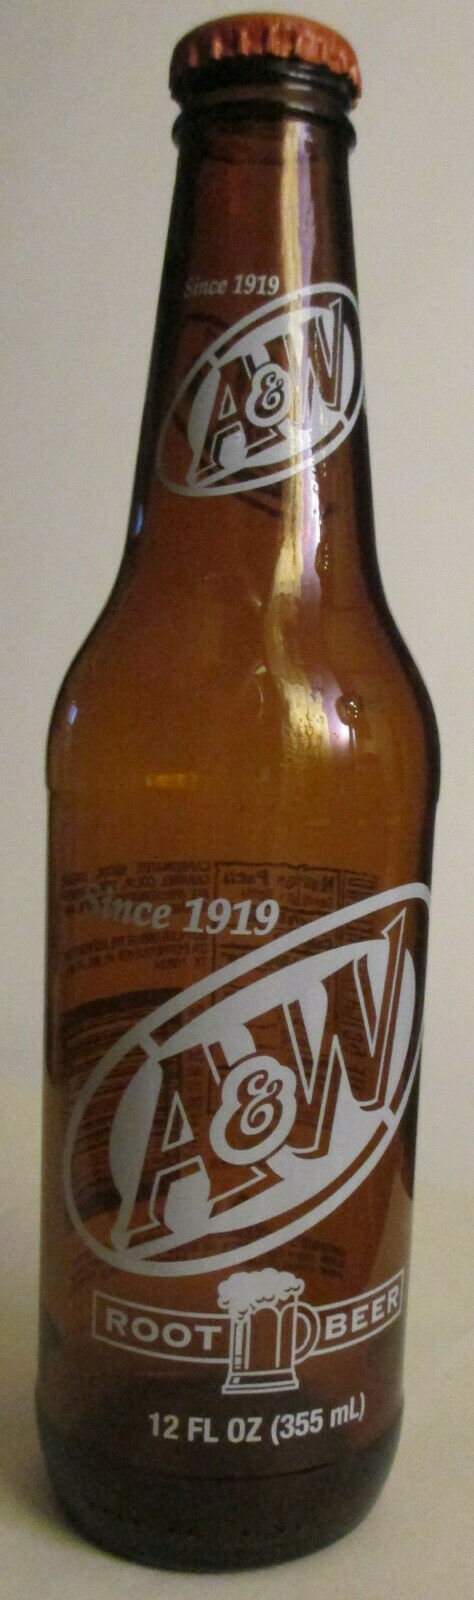 A&W Root Beer 12 oz. Brown Glass Bottle, White Label, Orange Cap, West Jefferson